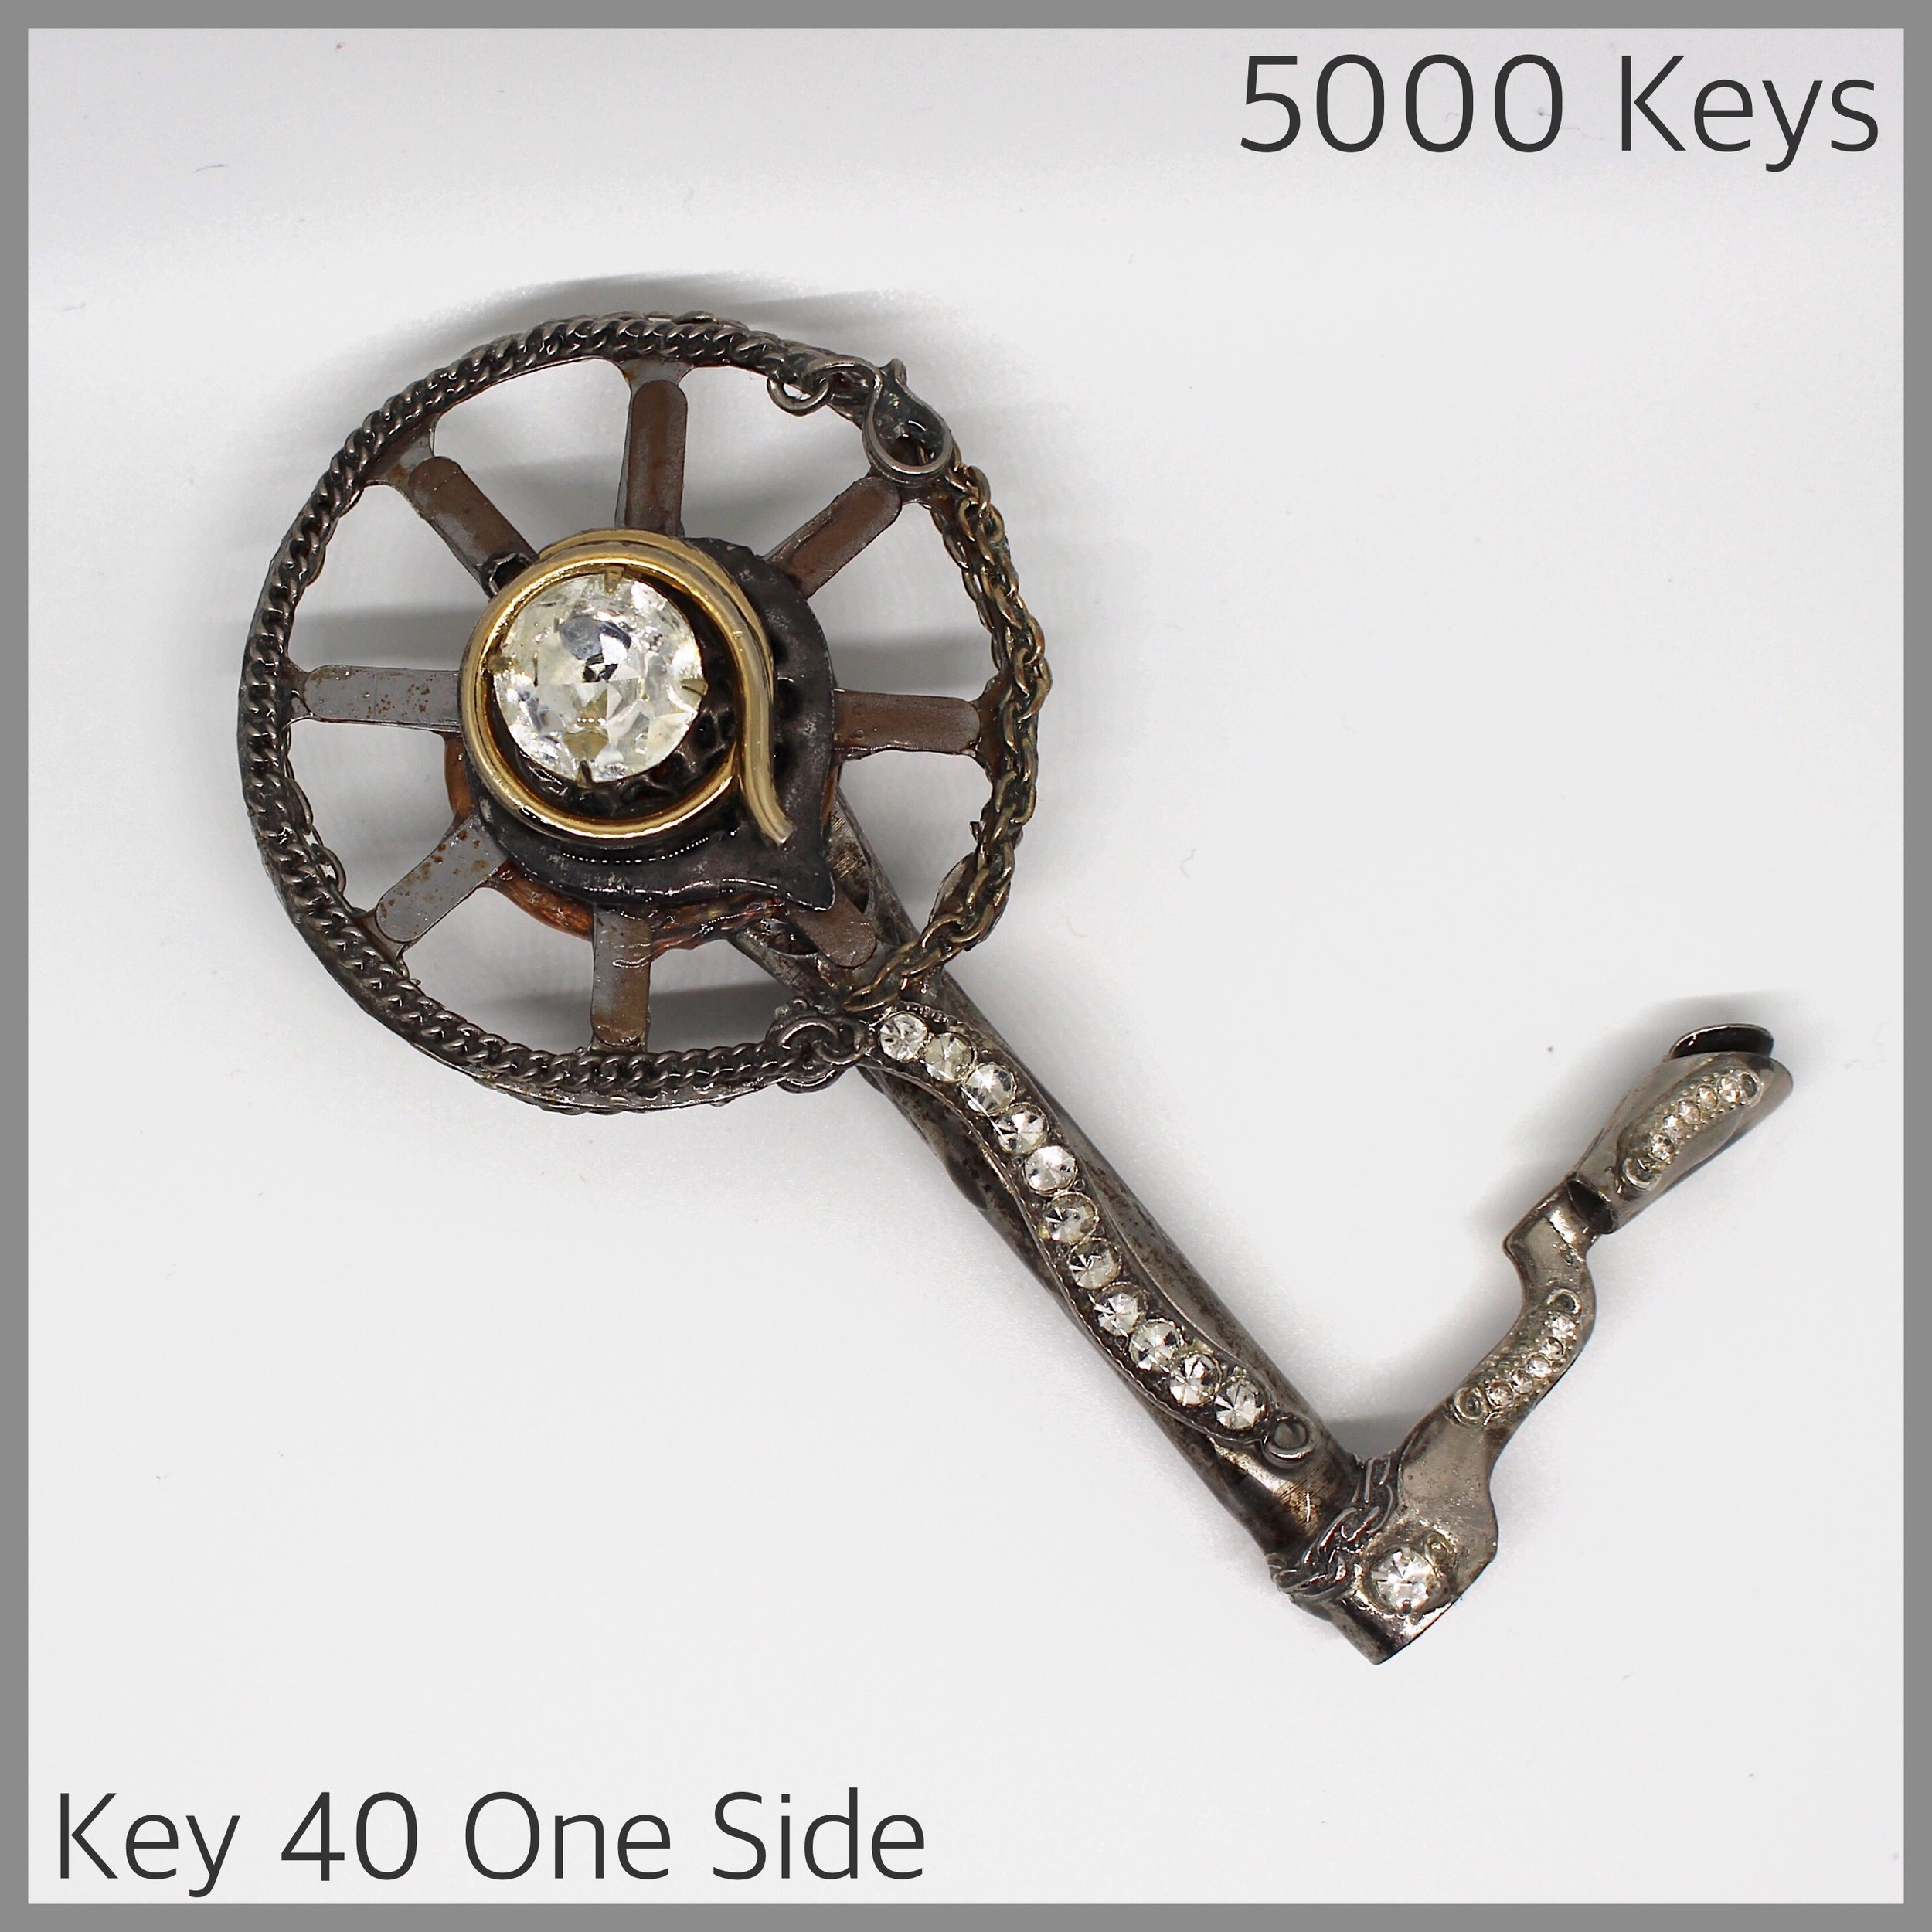 Key 40 one side - 1.JPG